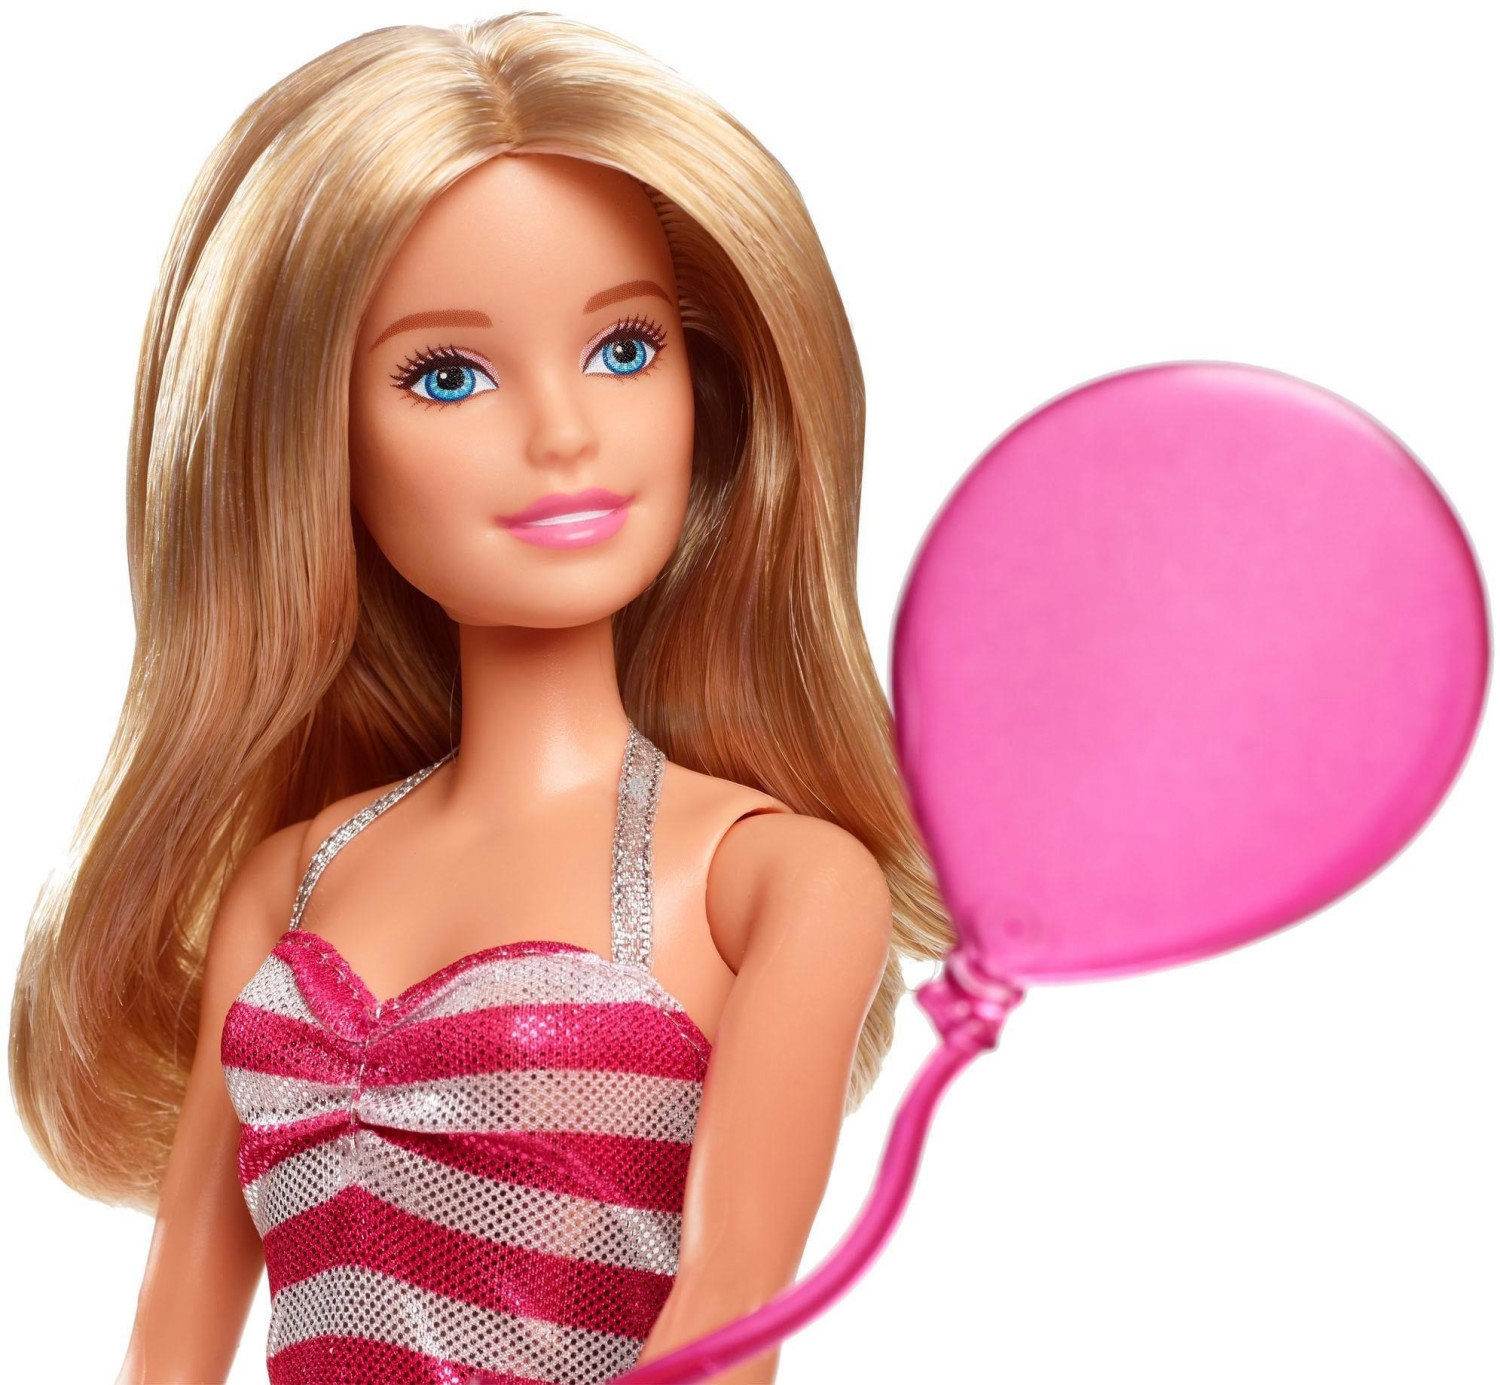 Buy Mattel Barbie Advent Calendar 2019 from £22.95 (Today) Best Deals